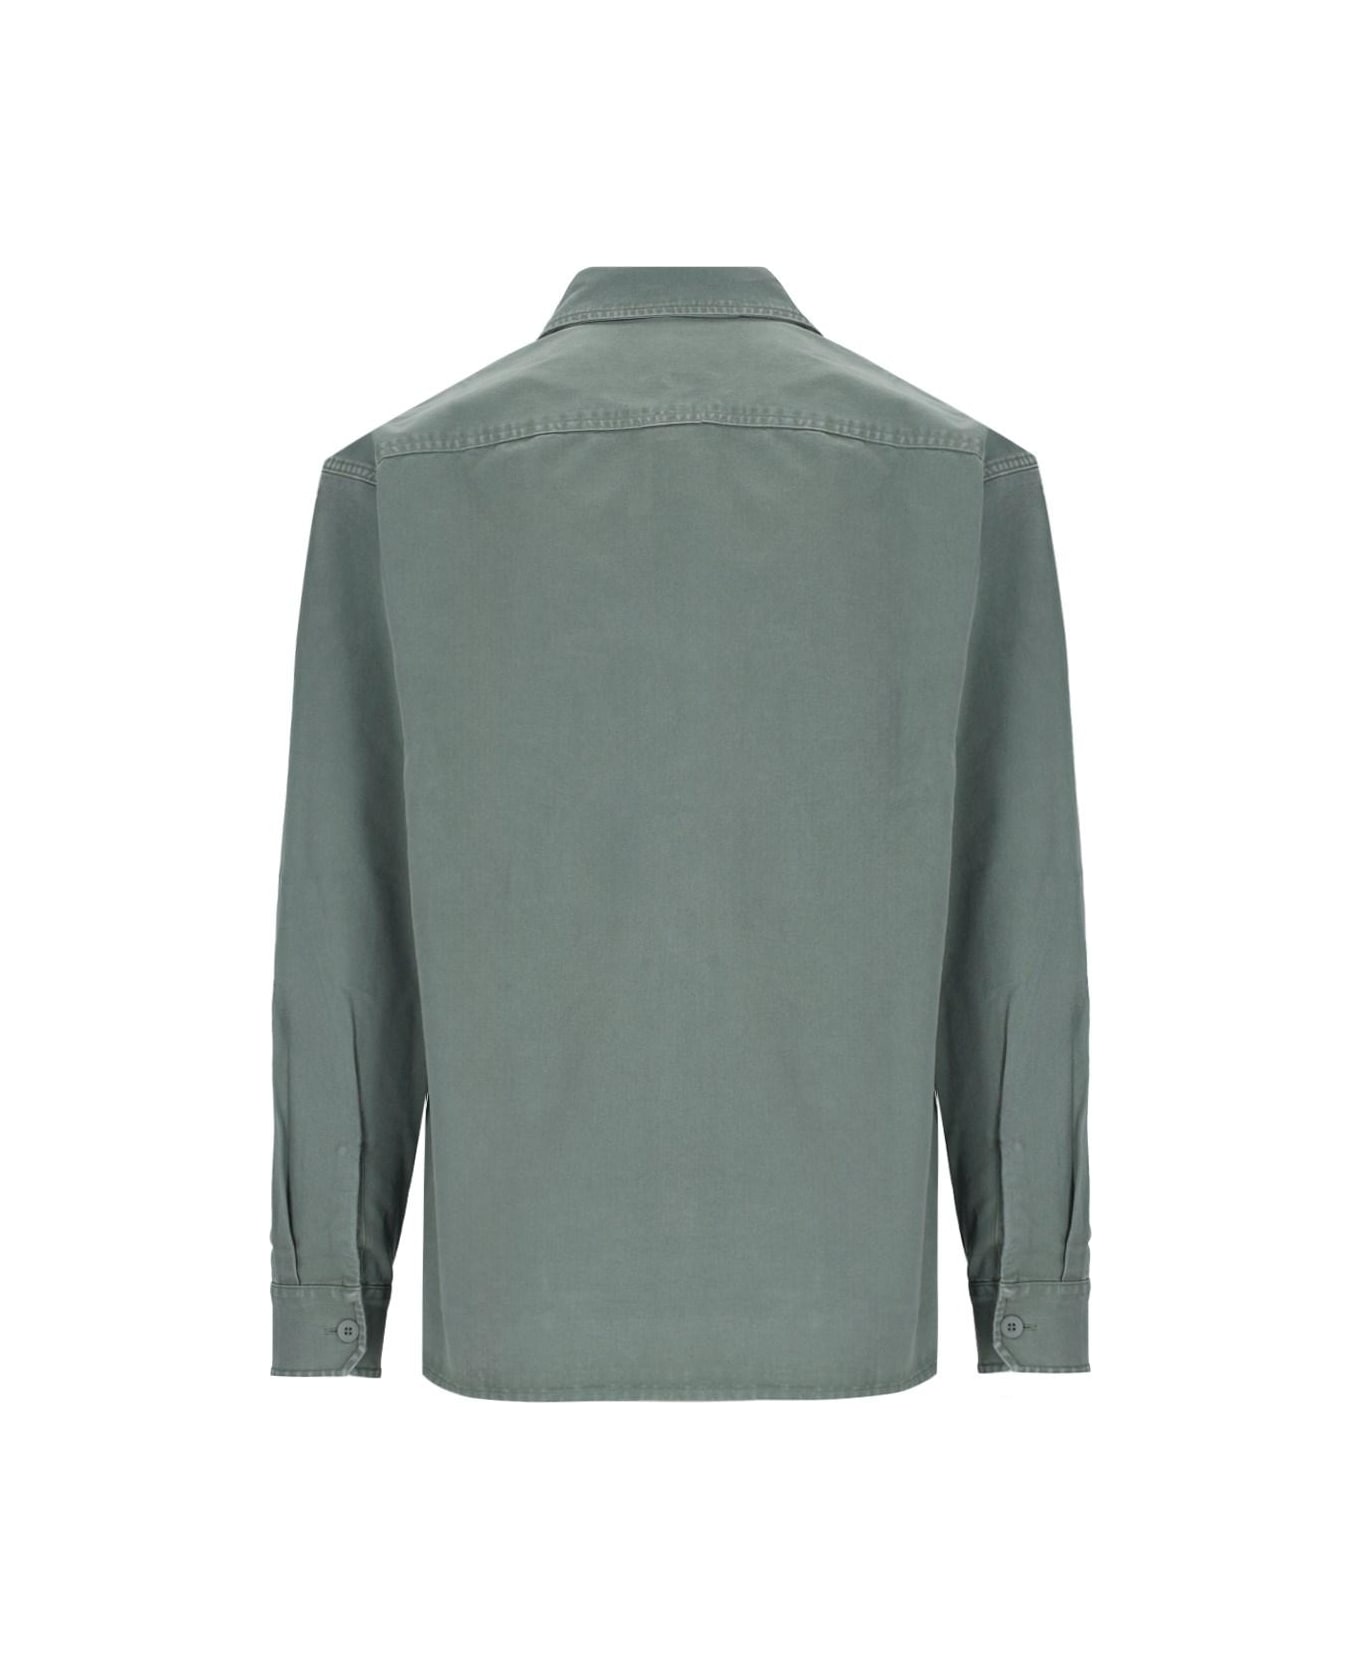 Carhartt 'reno' Shirt Jacket - Verde シャツ